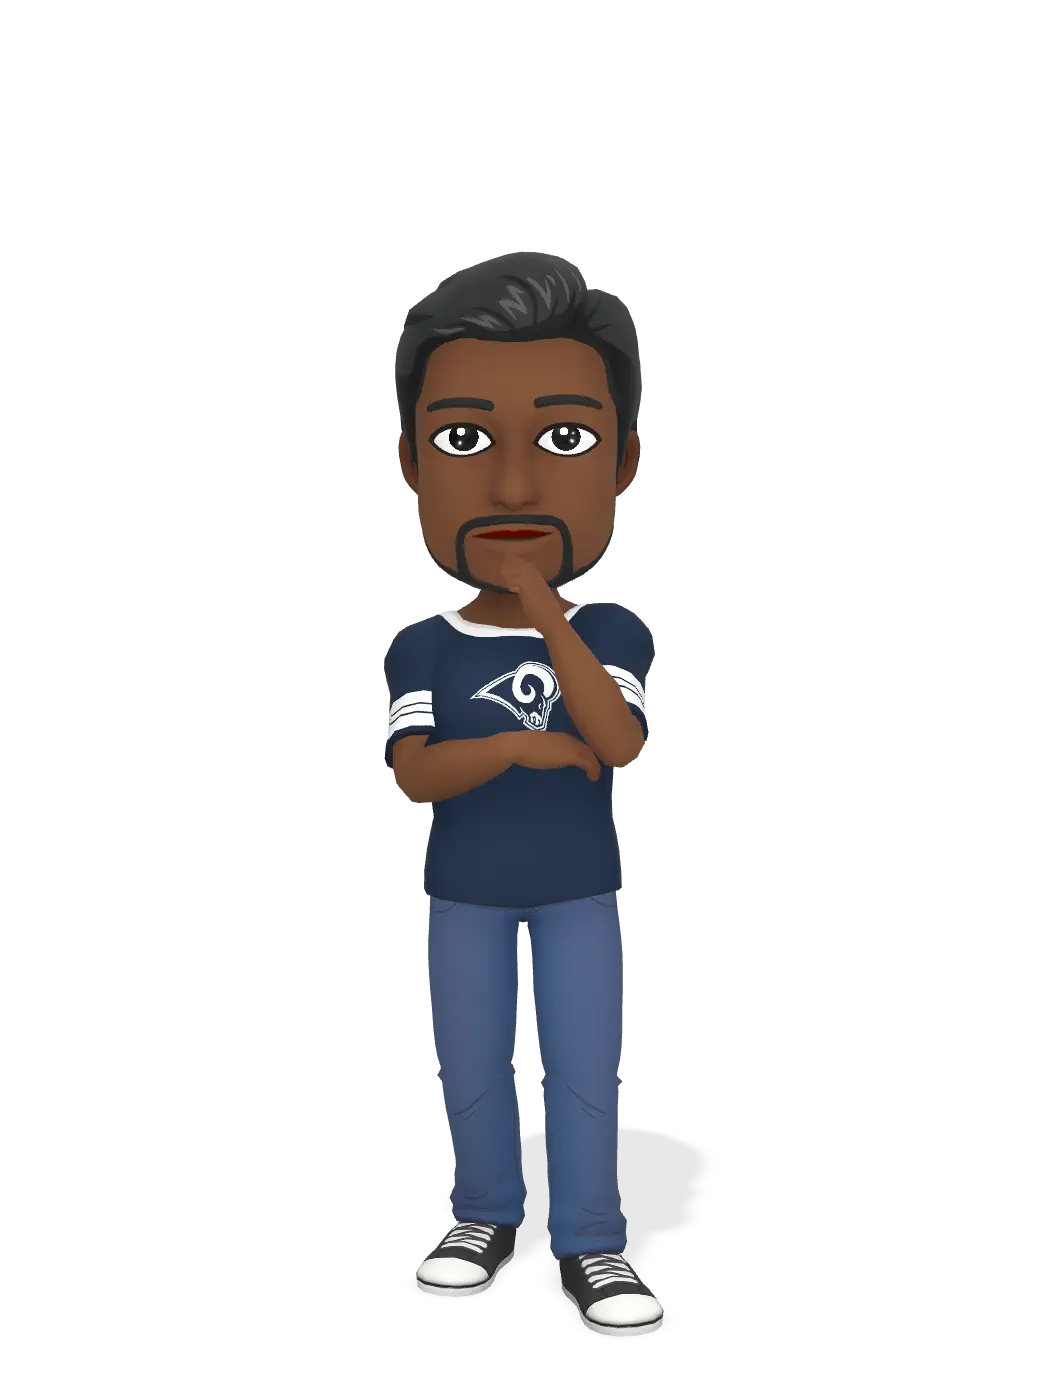 3D Bitmoji for mikalbridges avatar